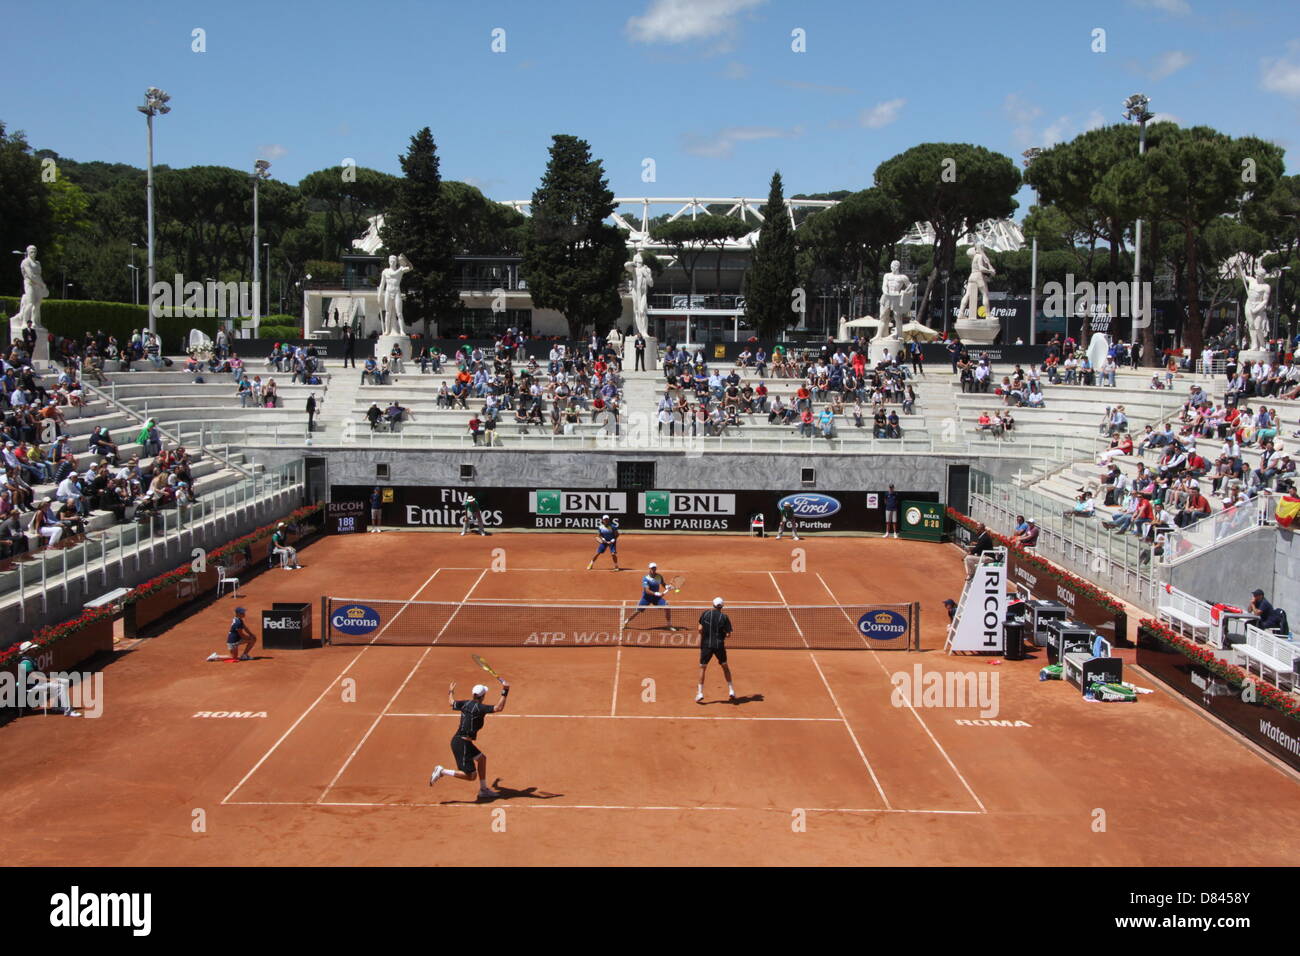 JC Tennis: Tales of a Pilgrim: Italian Open in Rome: best clay ATP